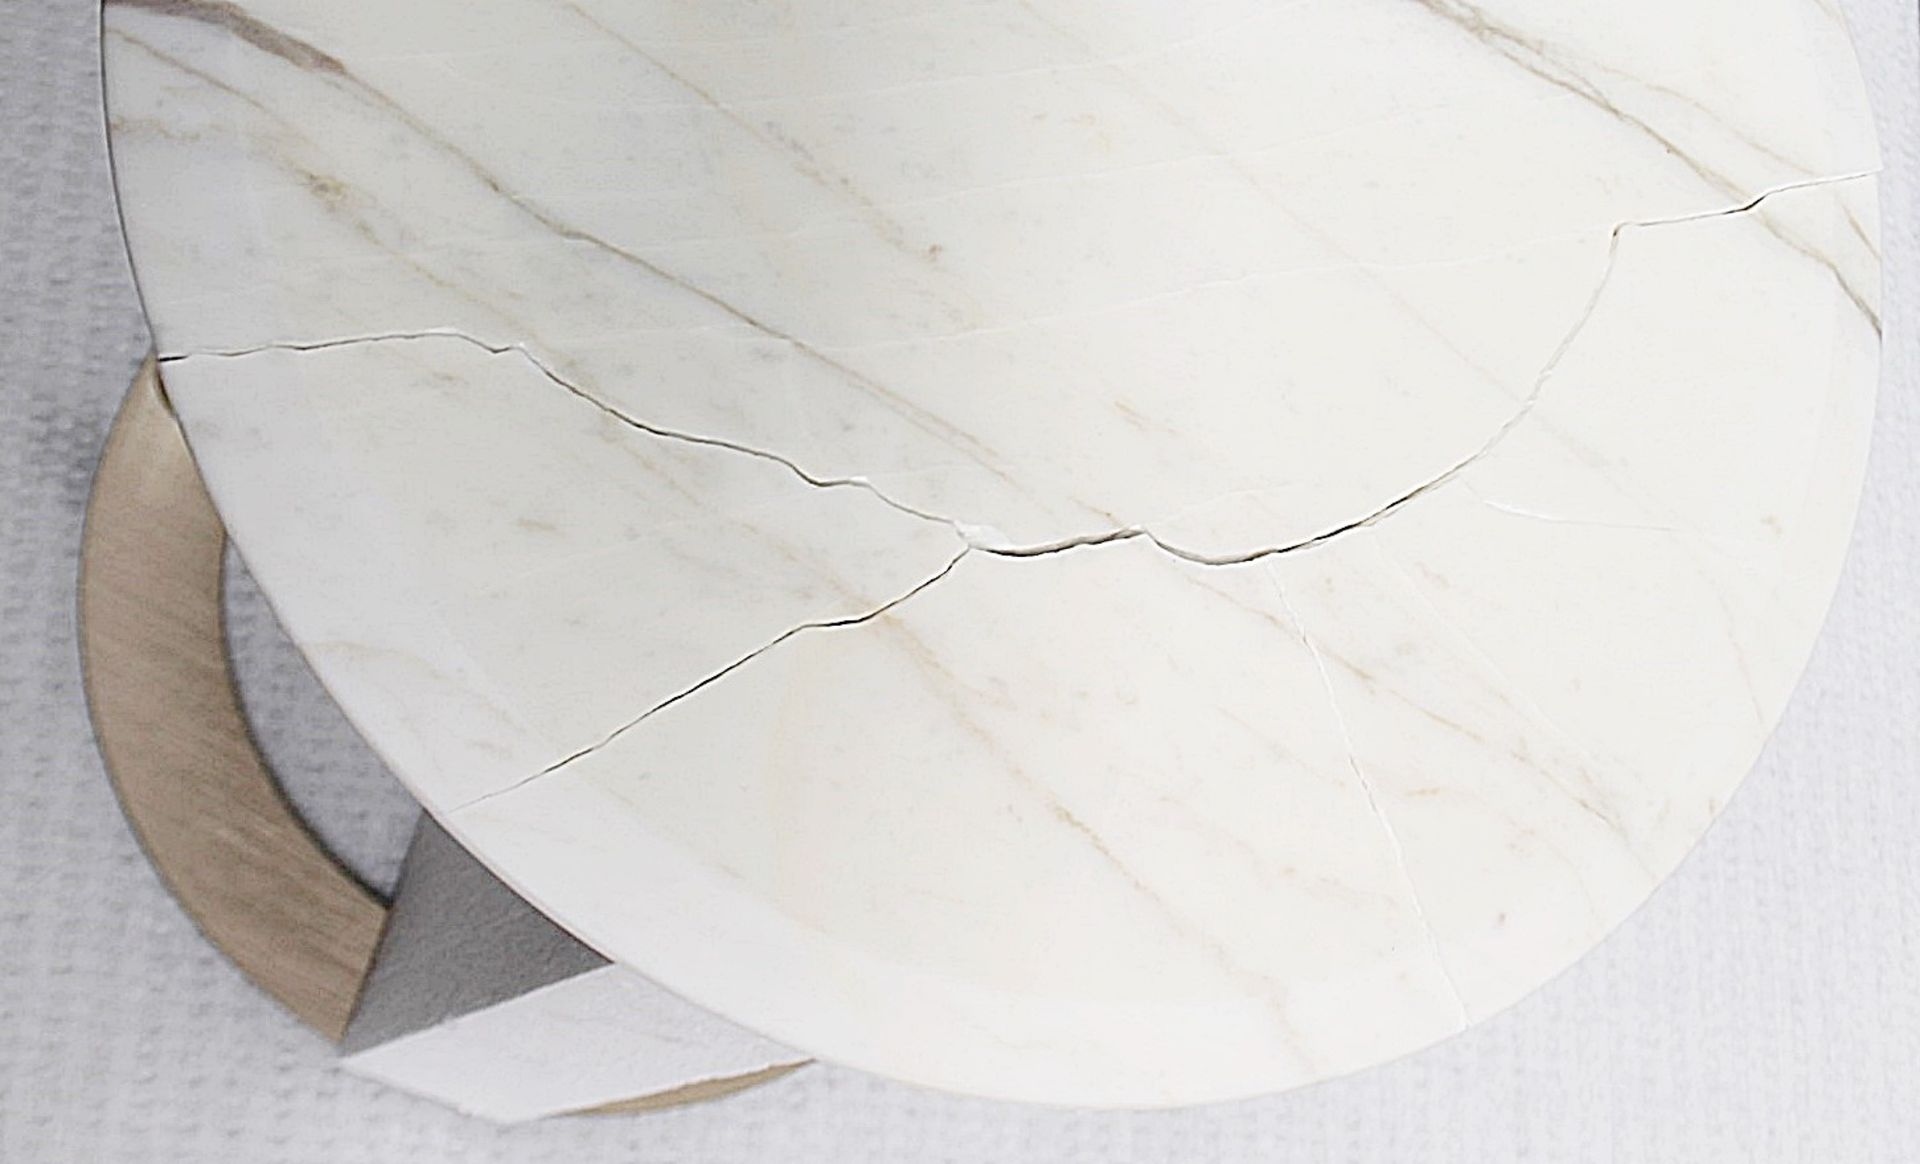 1 x POLTRONA FRAU 'JOK' Marble-Topped Round Luxury Designer Side Table - Original Price £1,285 - Image 3 of 8